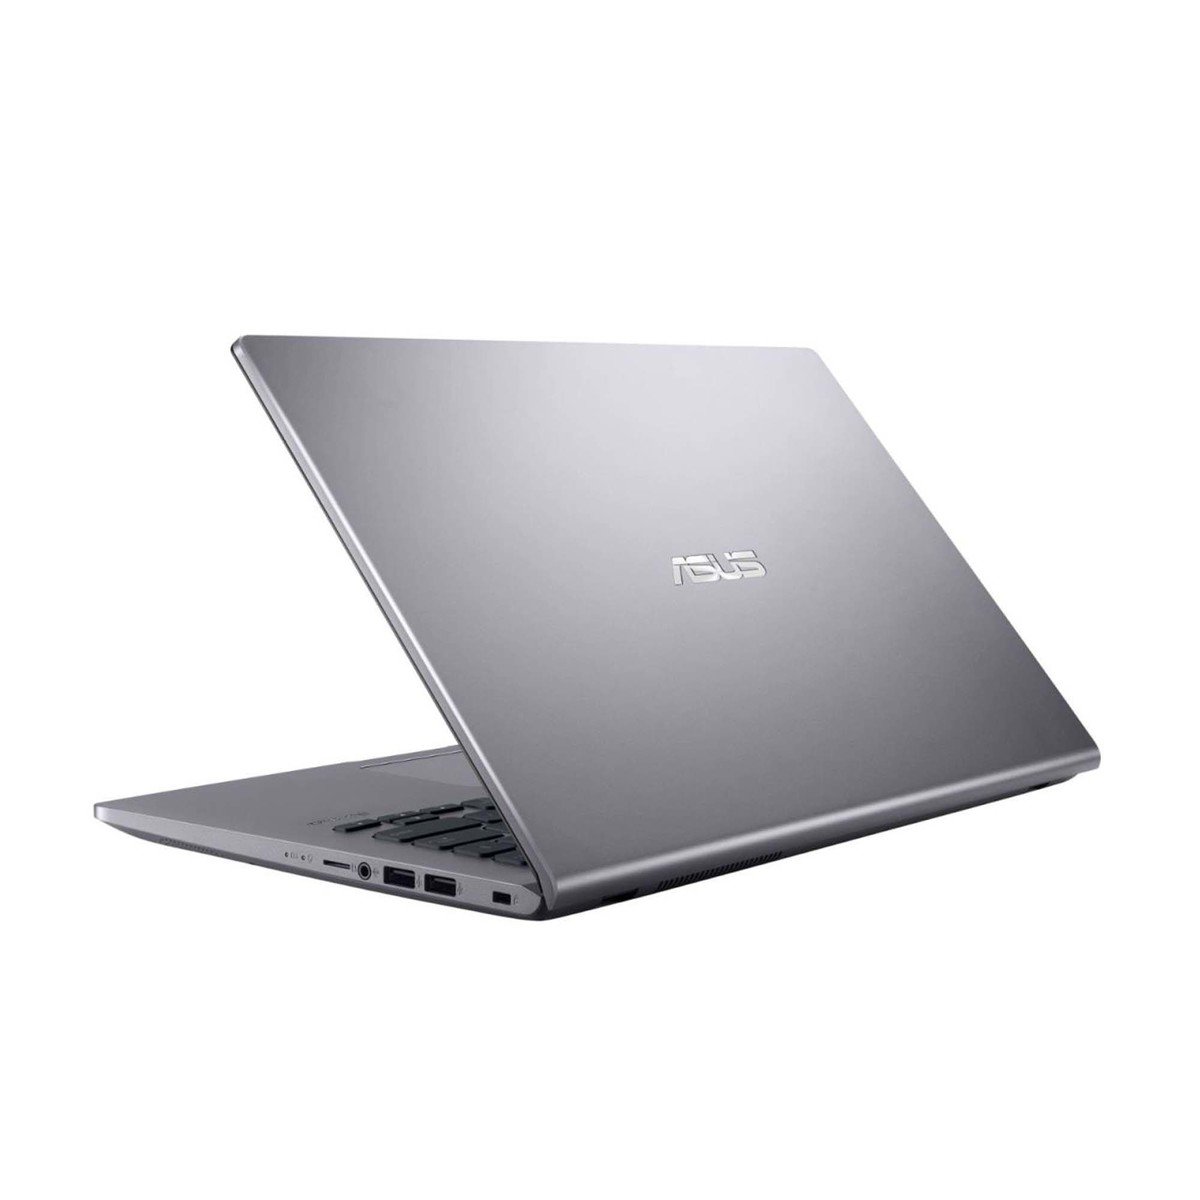 Asus Vivobook X409FA-EK067T Laptop,Intel Core i3-8145U, 4 GB RAM, 1TB HDD,Intel HD Graphics,14.0inches, Windows 10,Slate Gray